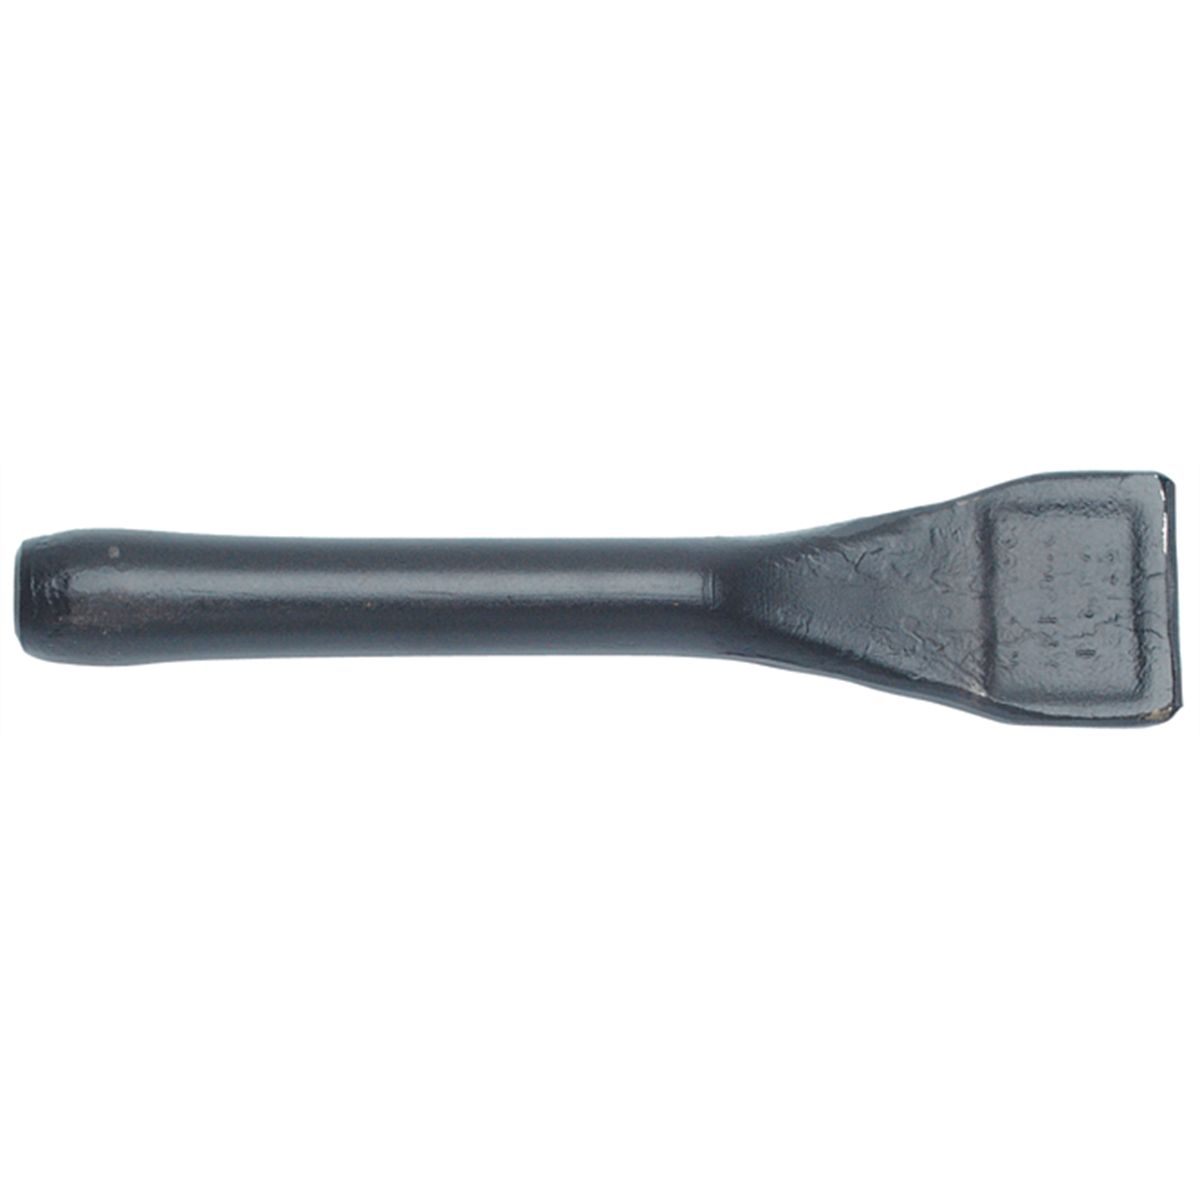 Bead Breaker Tool / Driving Iron T26A